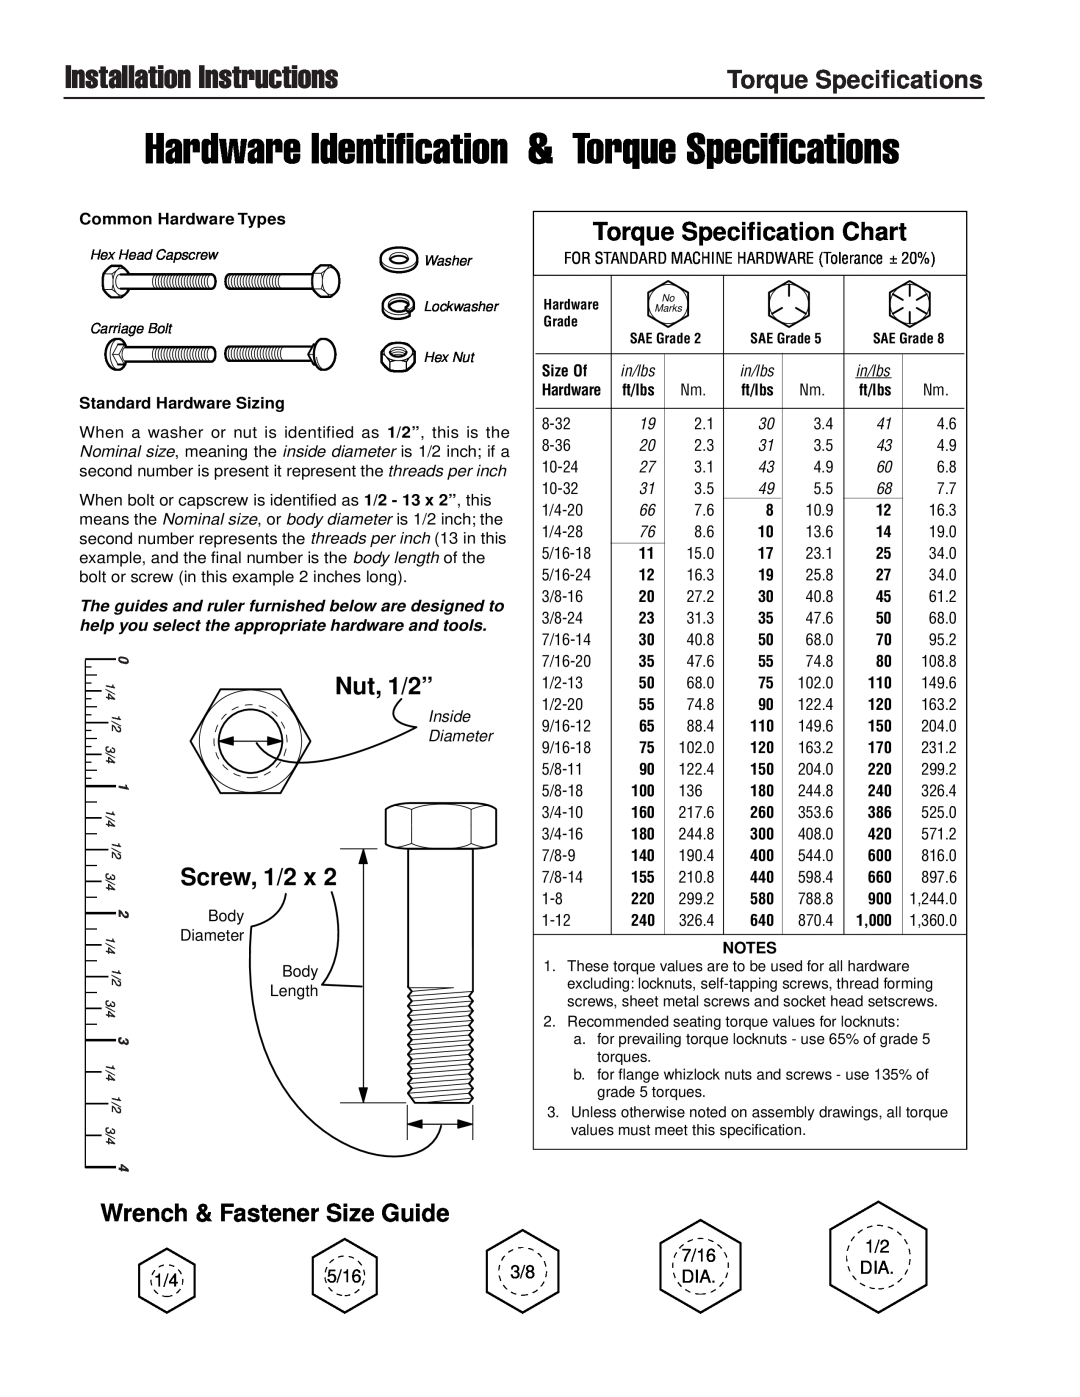 Briggs & Stratton 1687302 Hardware Identification & Torque Specifications, Installation Instructions, Nut, 1/2”, 7/16 